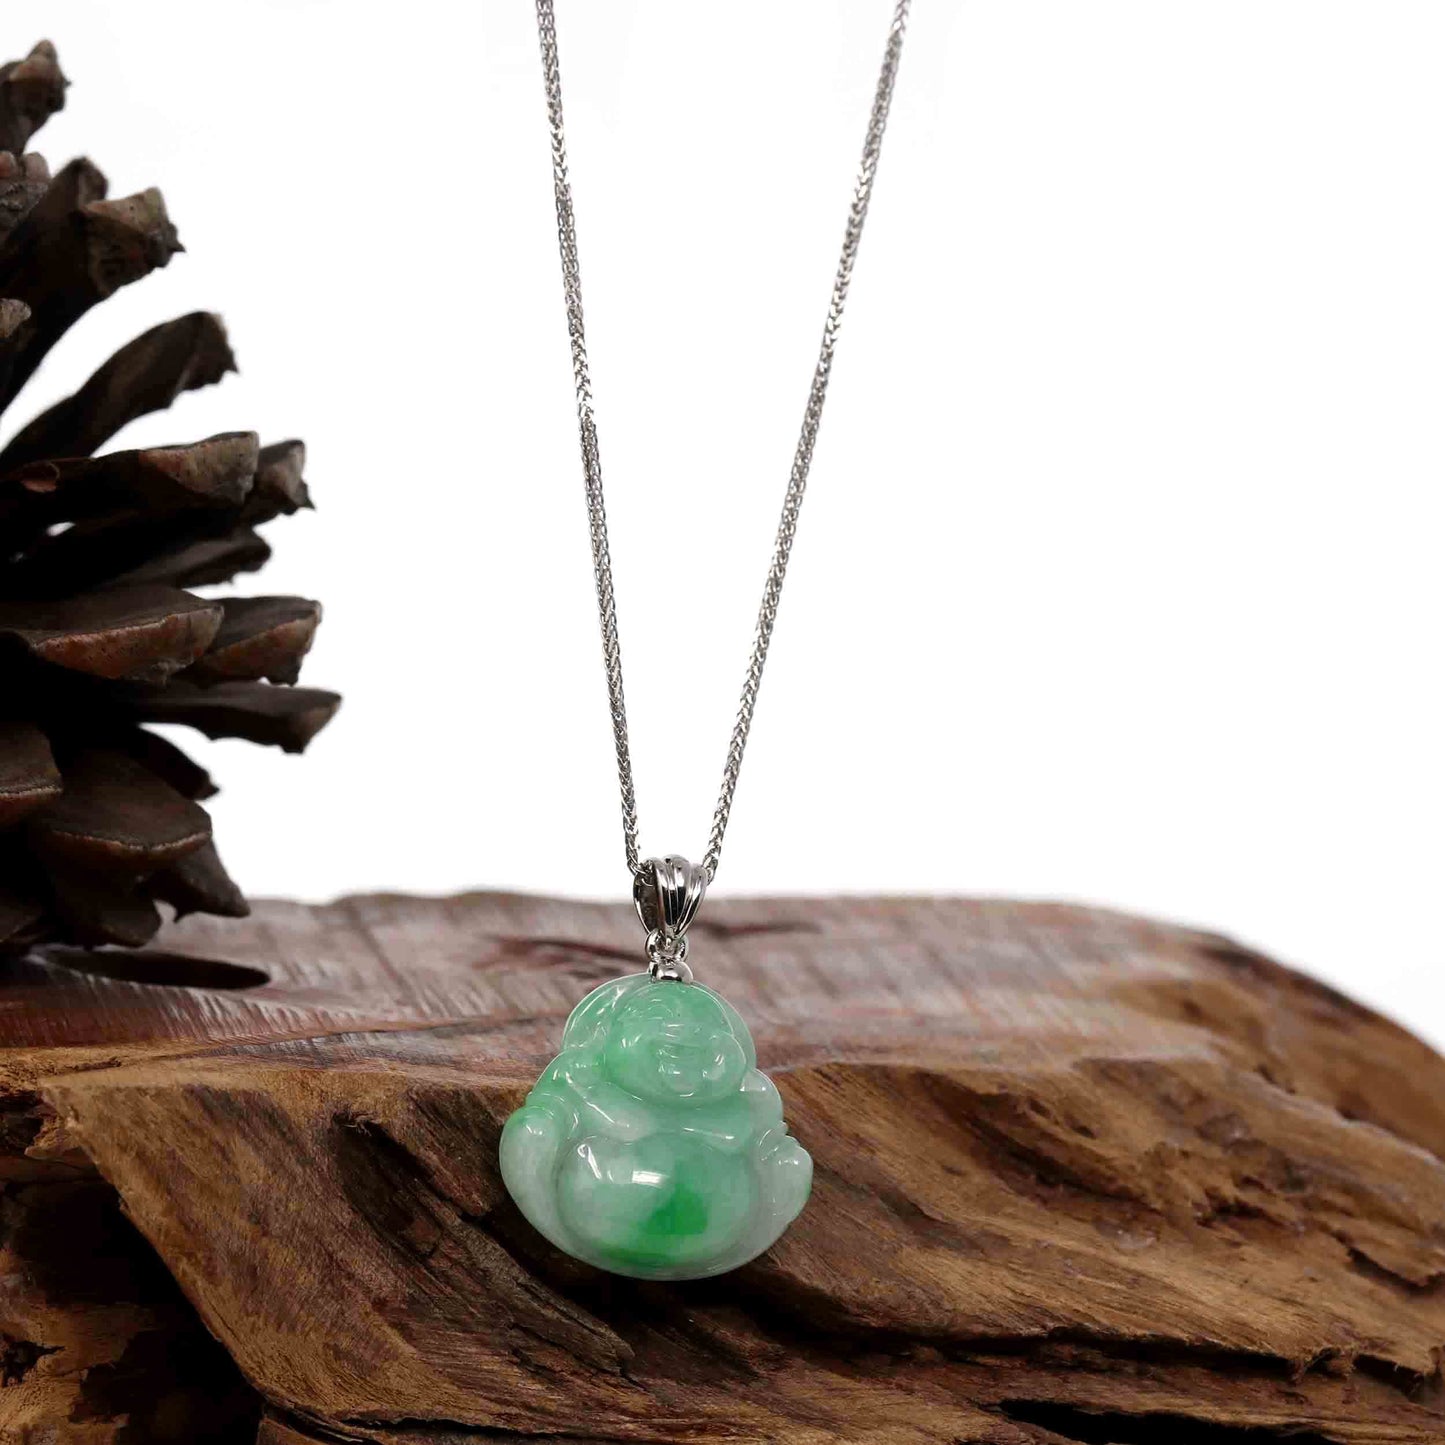 Large Spiritual Green Jade Laughing Buddha Unisex Pendant Necklace 20